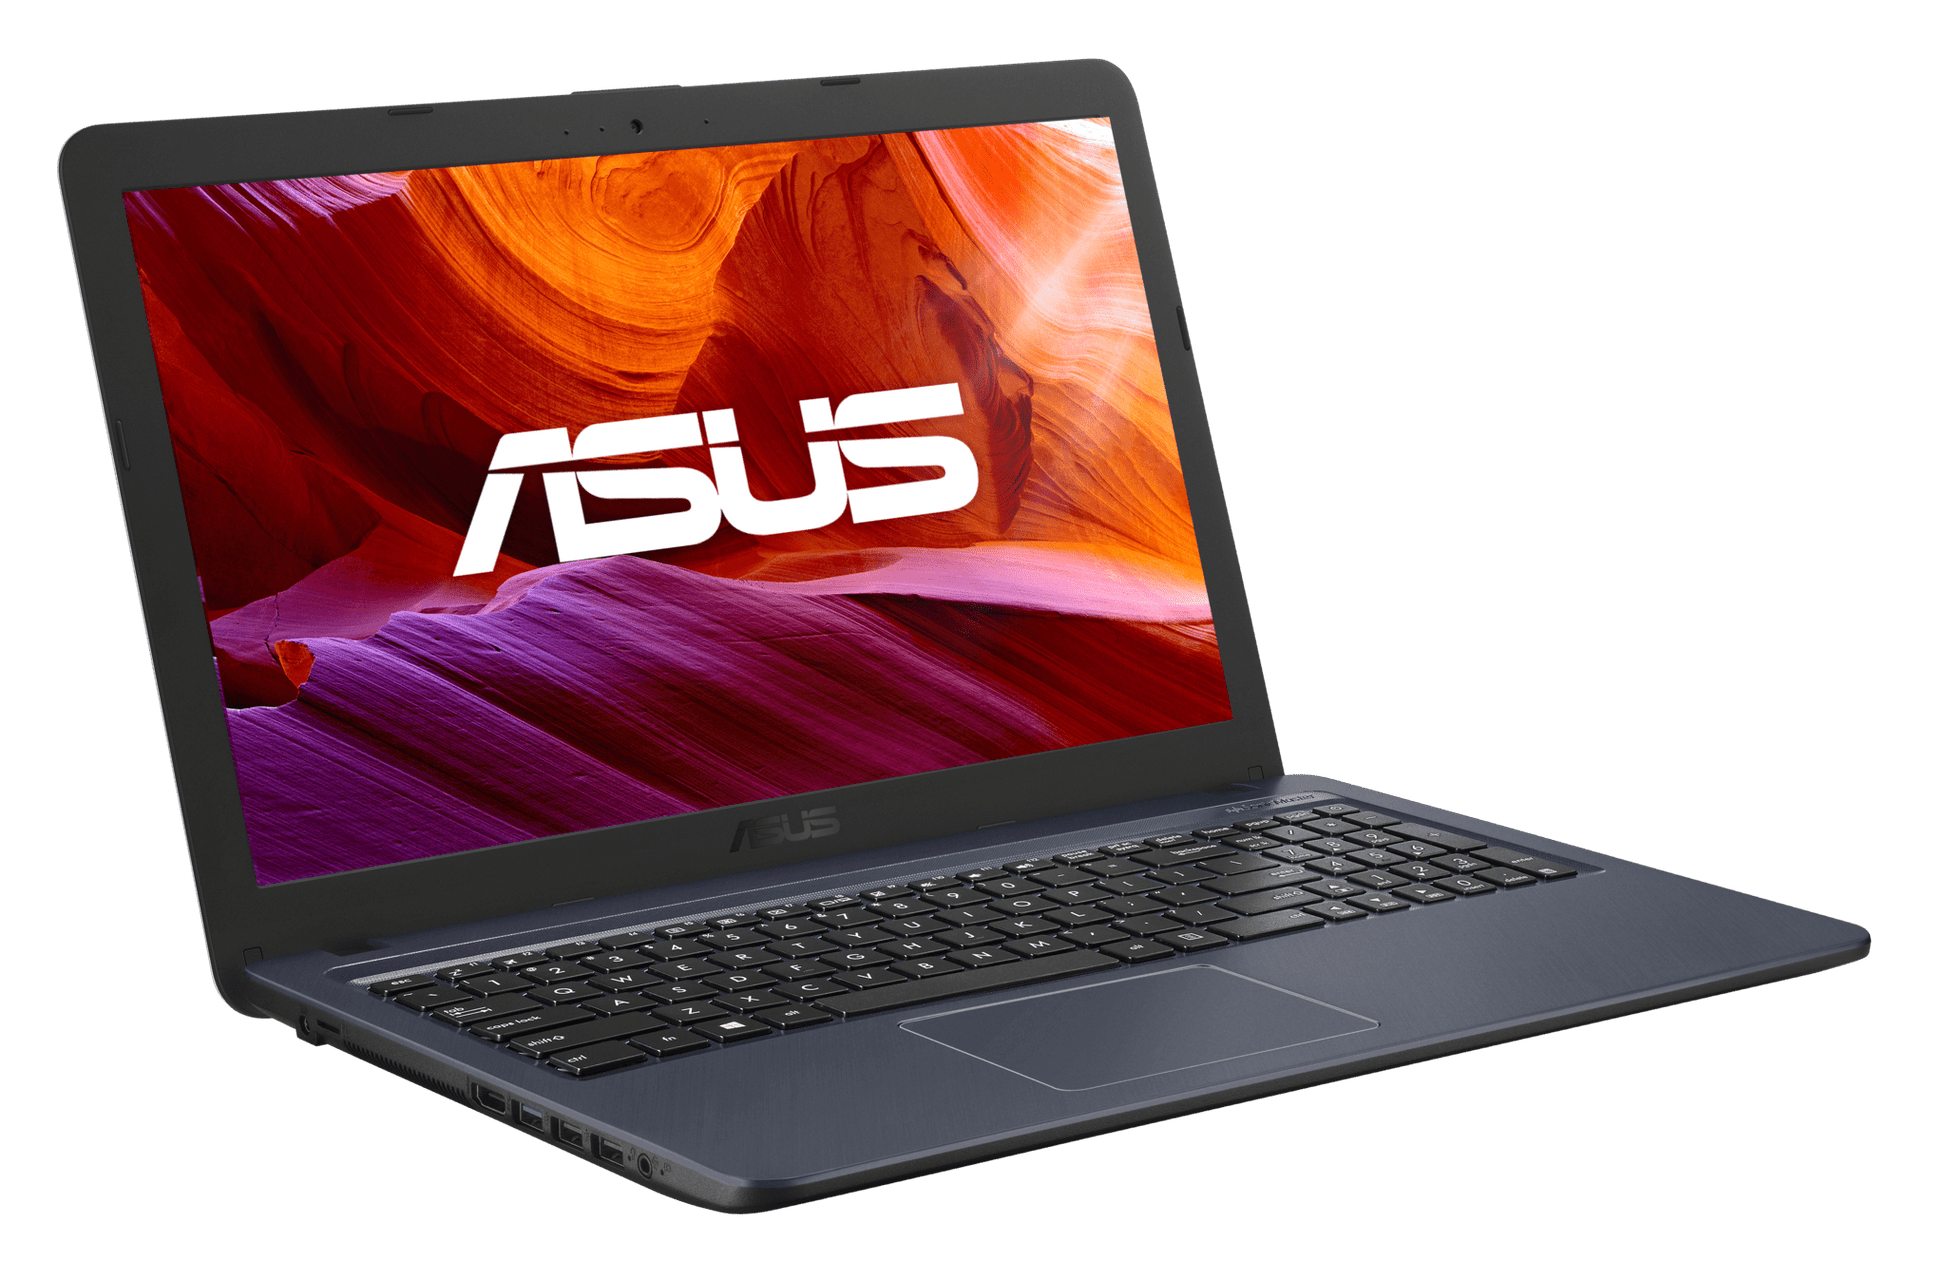 Notebook ASUS Laptop X543MA-GQ1025 Intel CELERON N4020 - 4GB LPDDR4 - 500GB HDD - W10 - 15.6 HD - Soundata S.A.